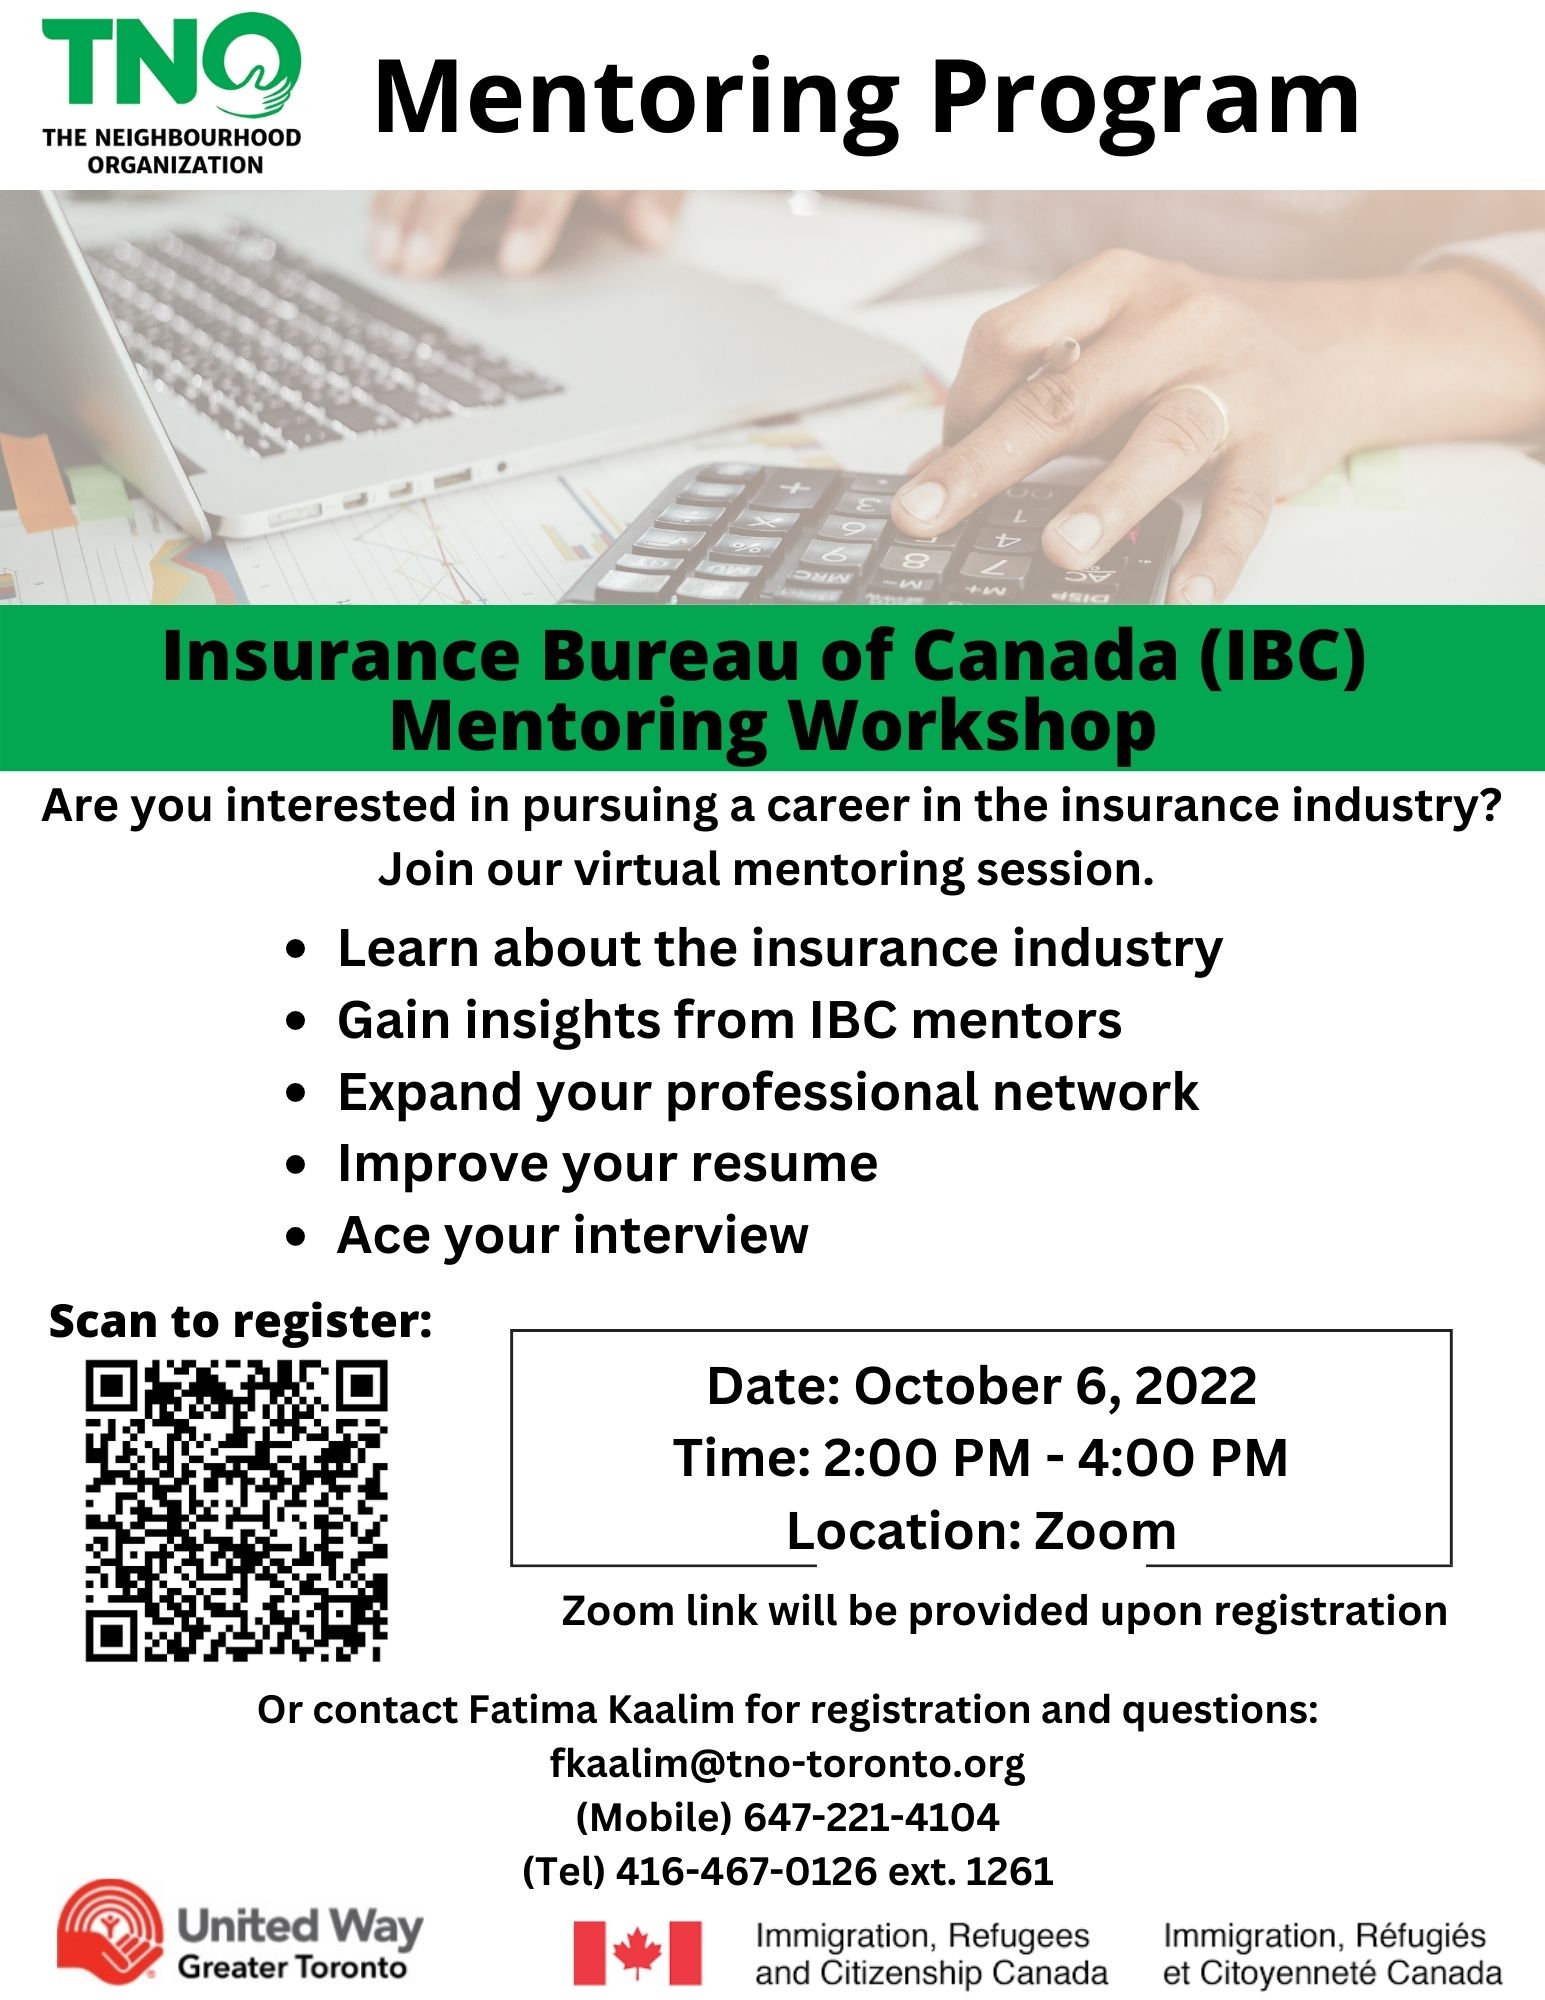 Insurance Bureau of Canada (IBC) event poster